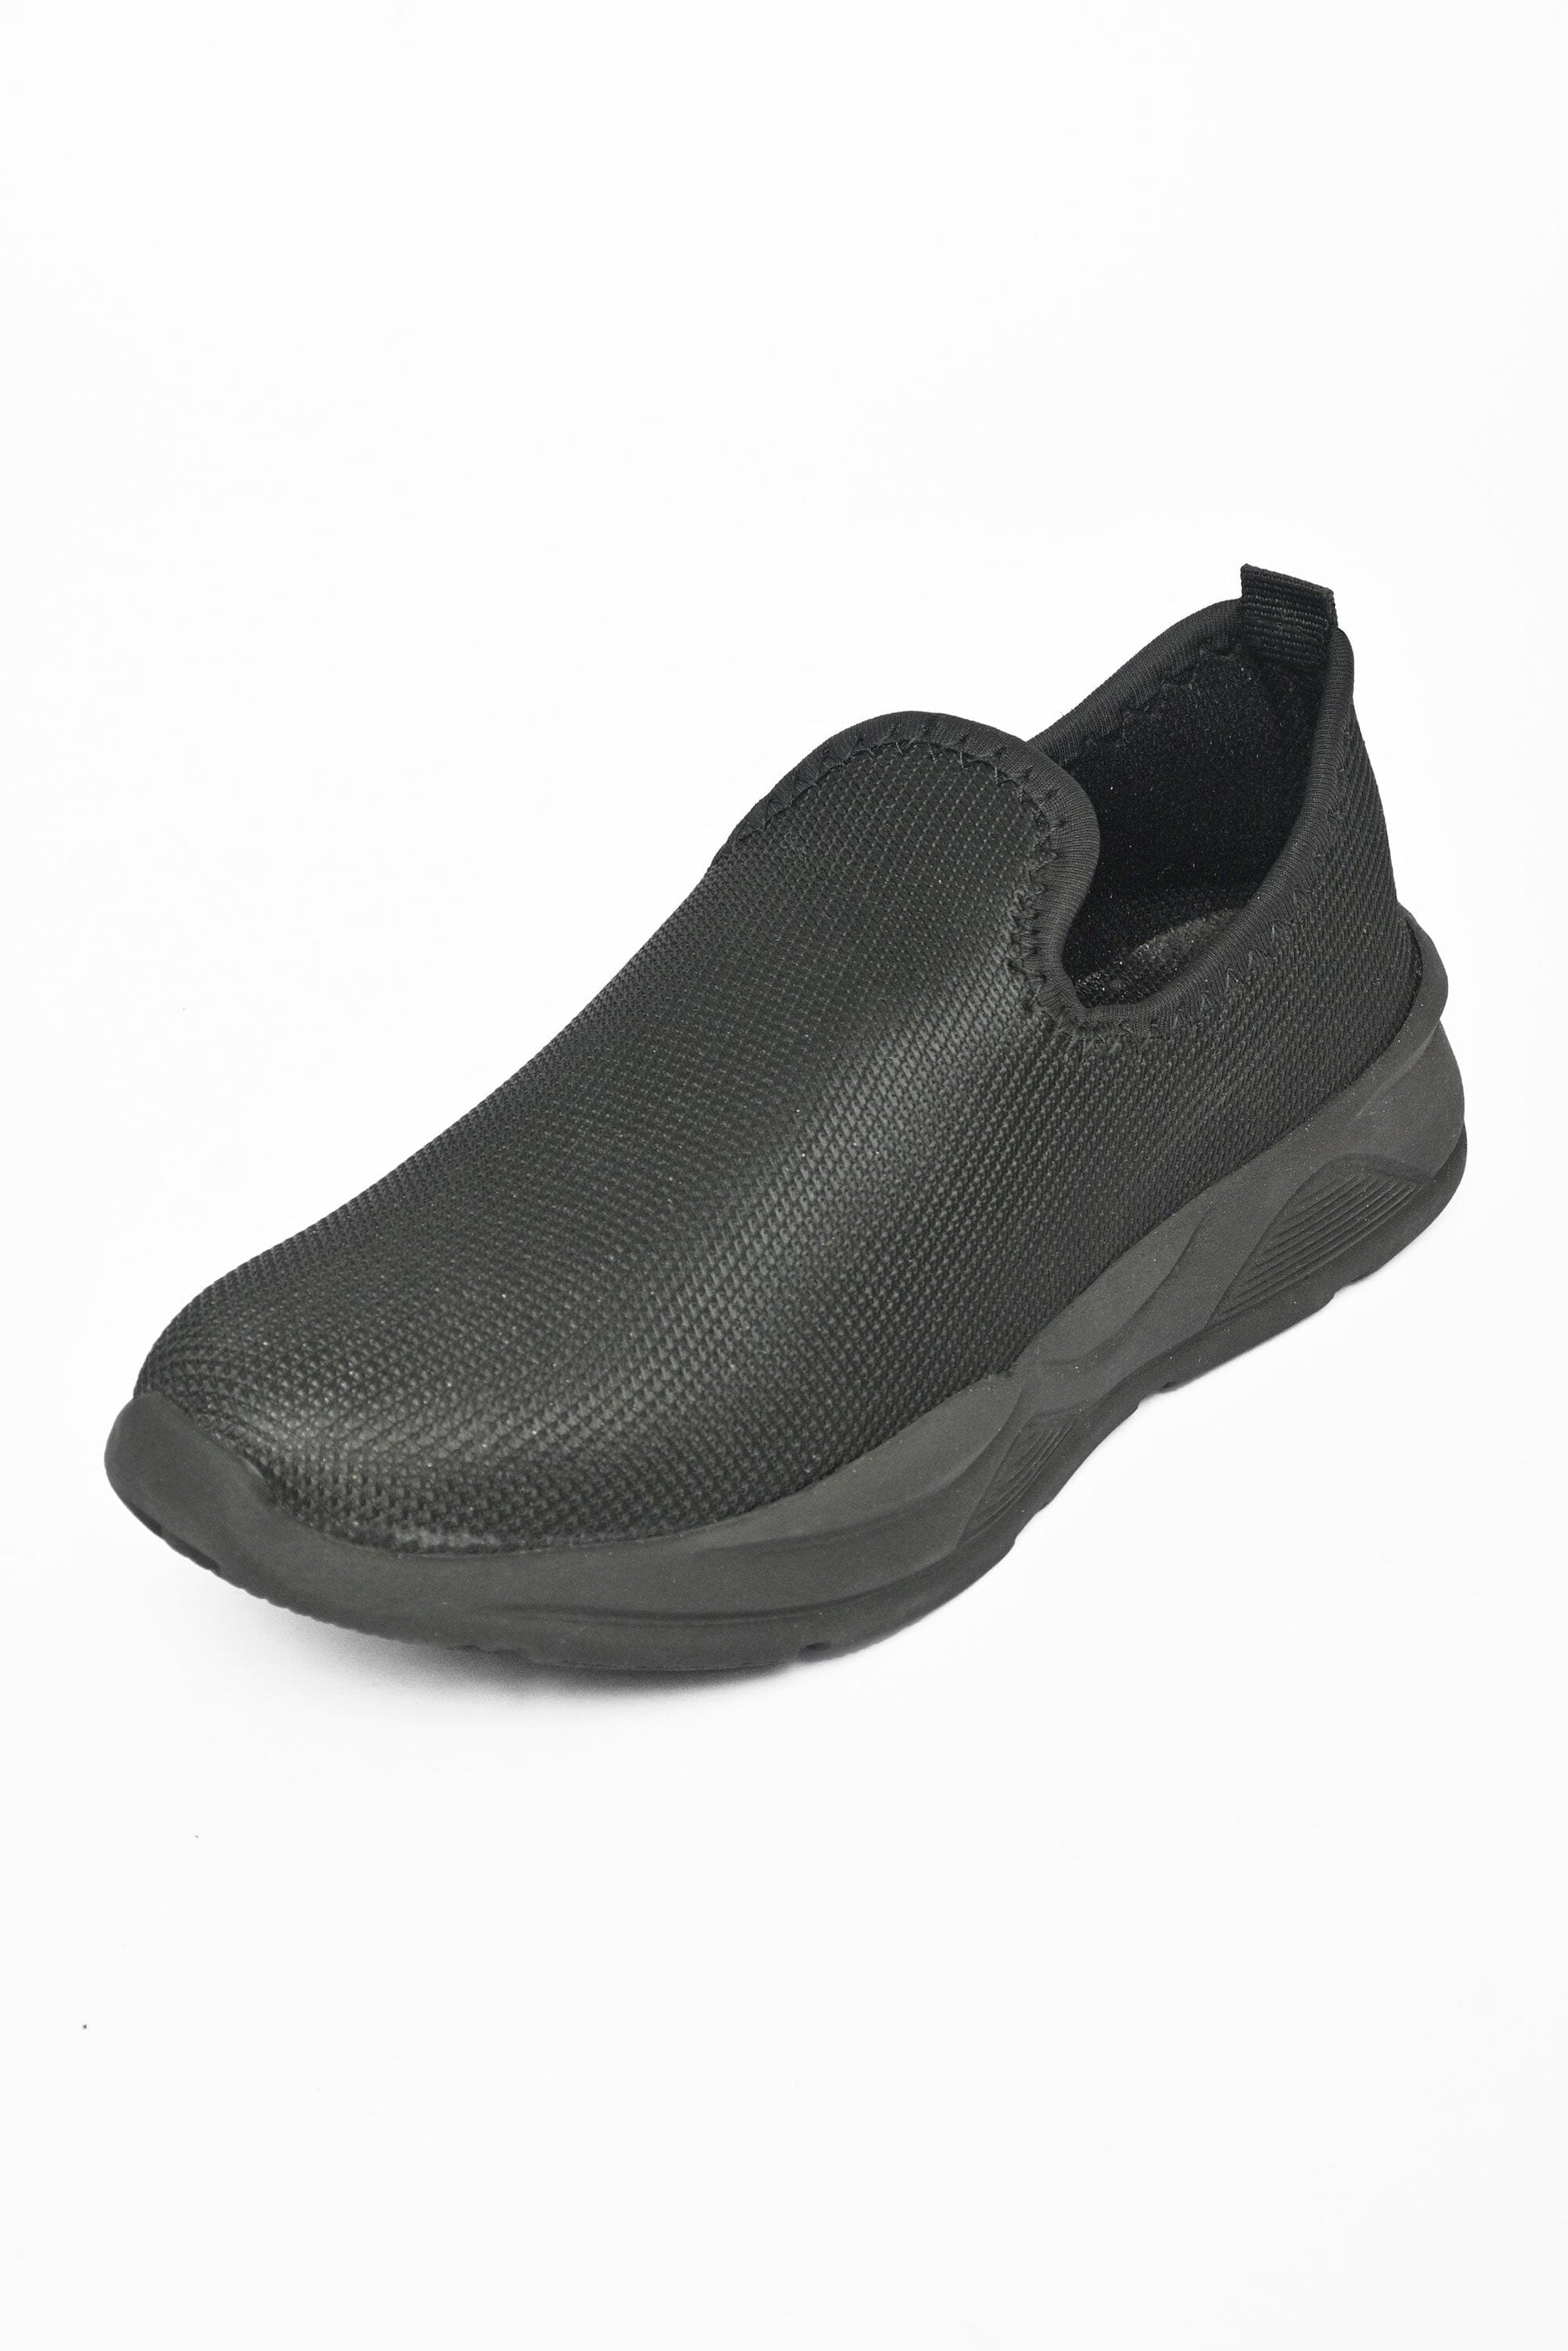 MR Men's Tabarre Slip On Jogger Shoes